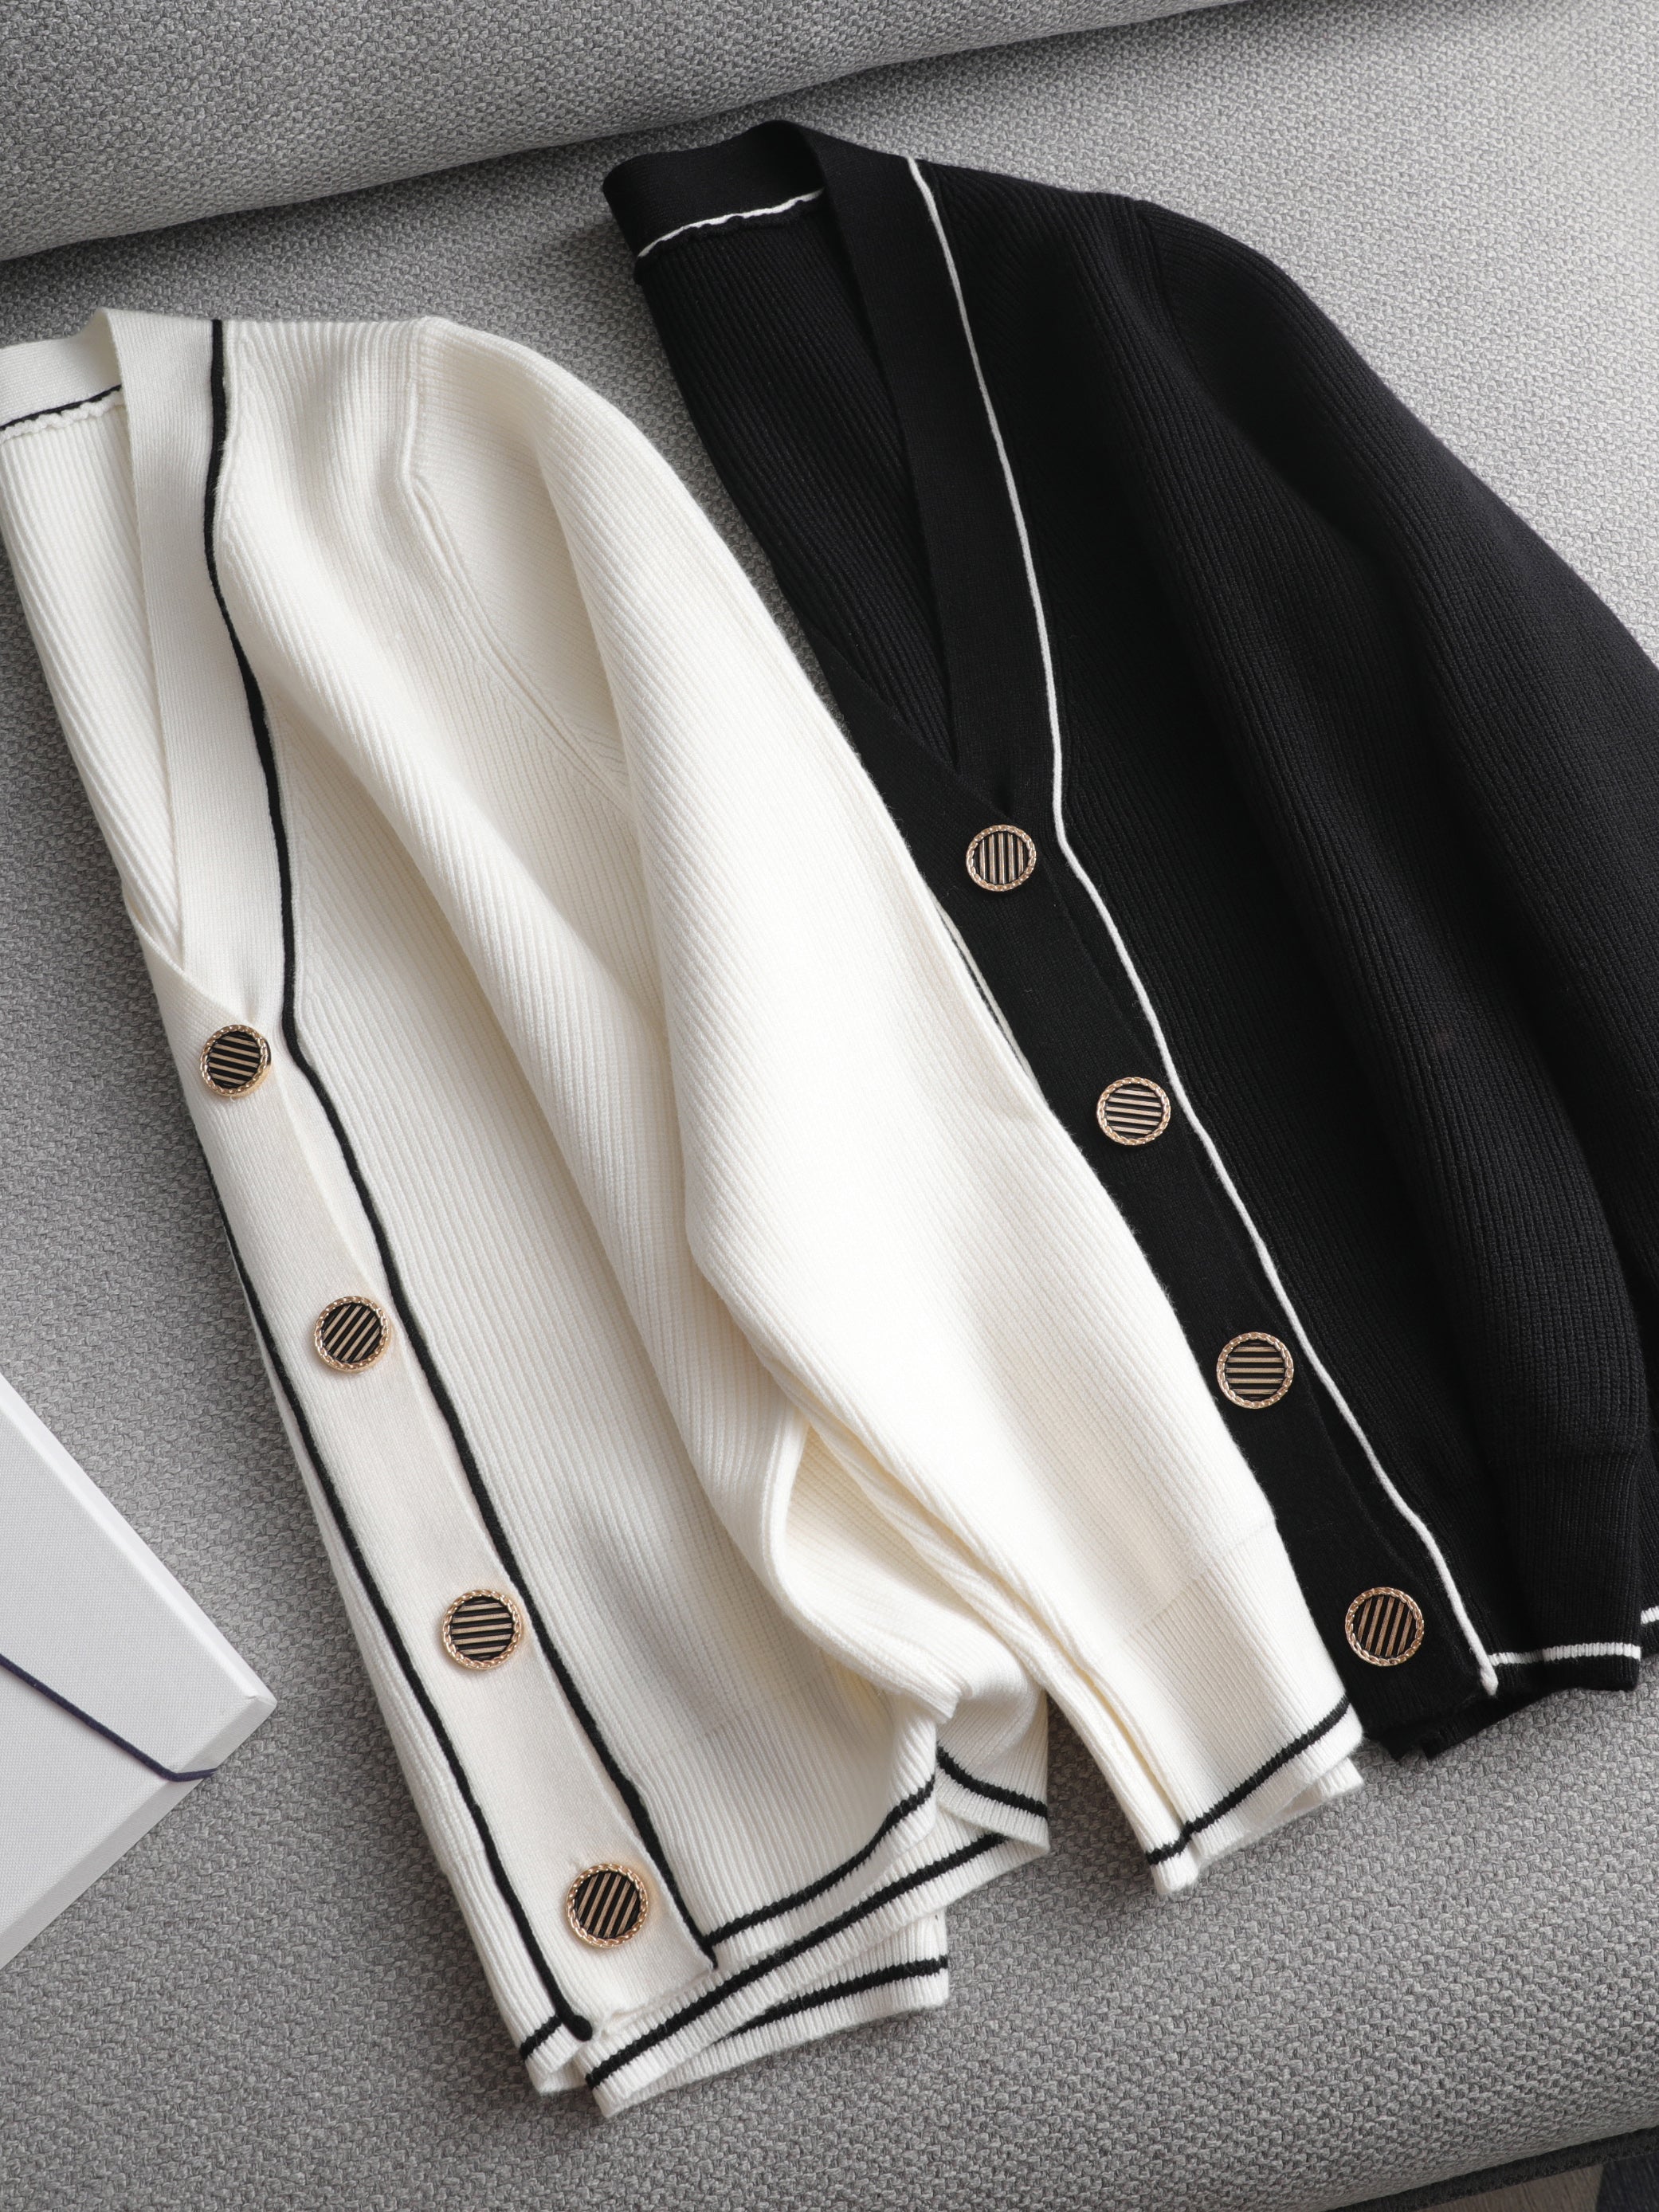 2021 White Black Solid Sweater Cardigans Jacket Ladies New Women Thick Sweater Coat V-Neck Cardigan Jacket Coat Outwear